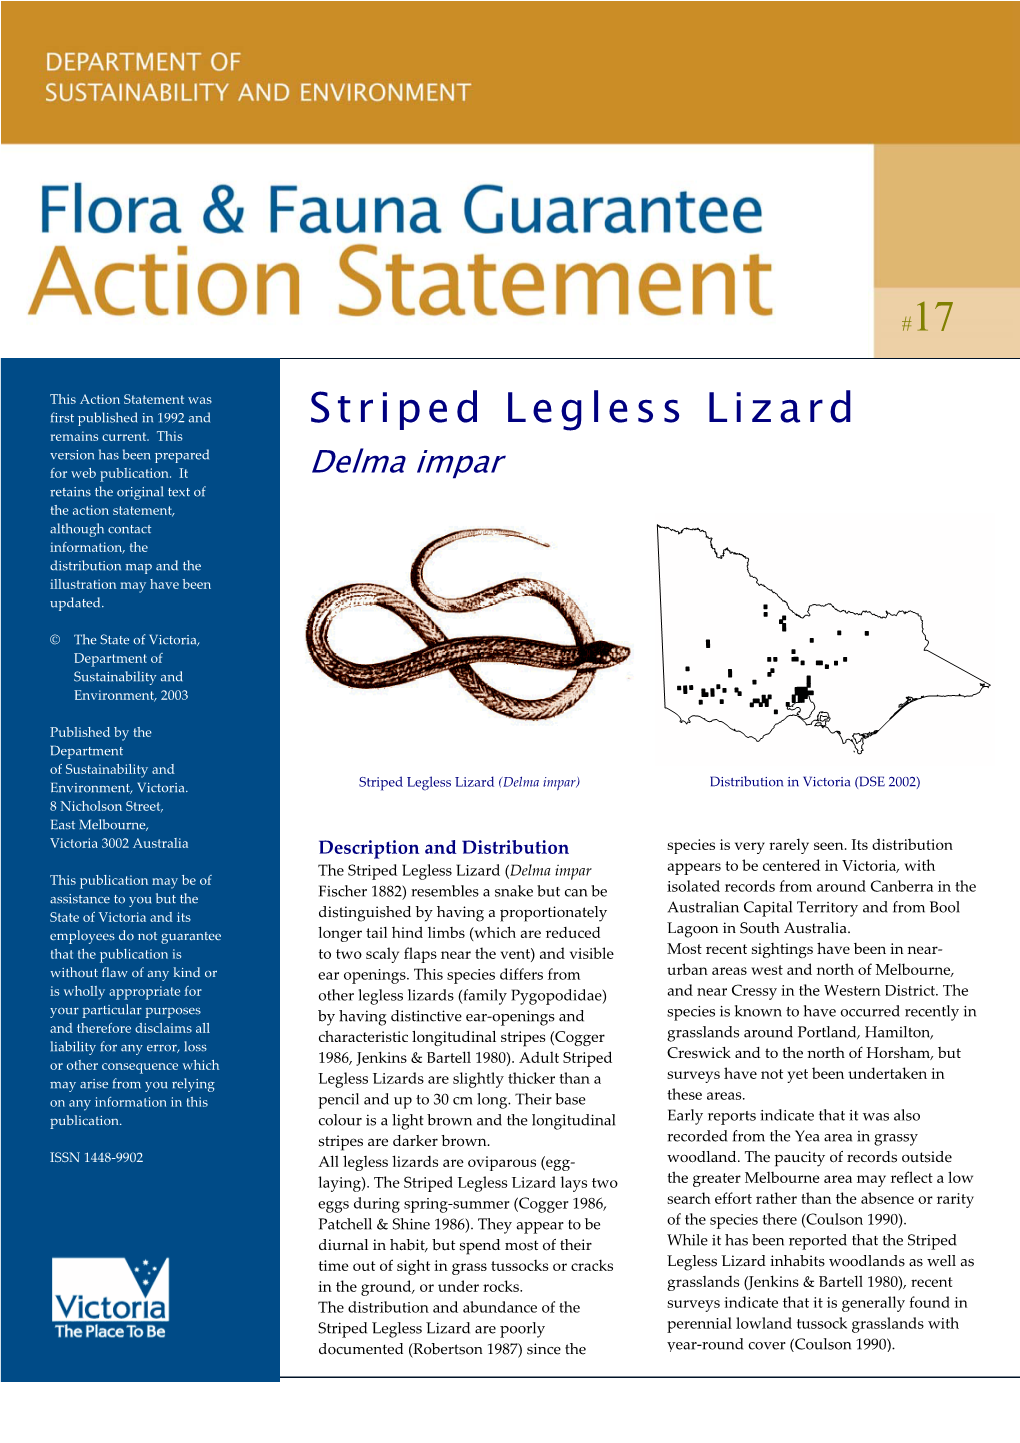 Striped Legless Lizard Version Has Been Prepared for Web Publication